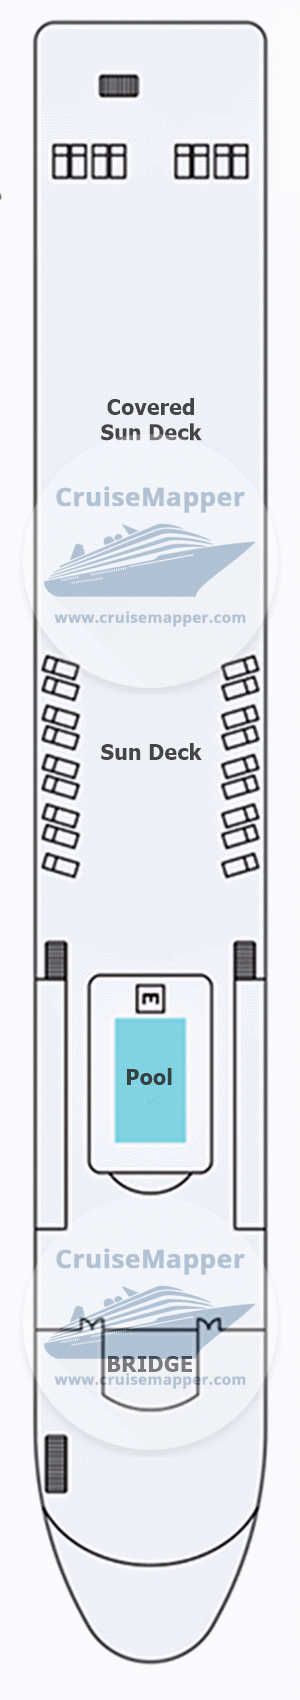 SS Sao Gabriel Deck 04 - Sundeck-Pool